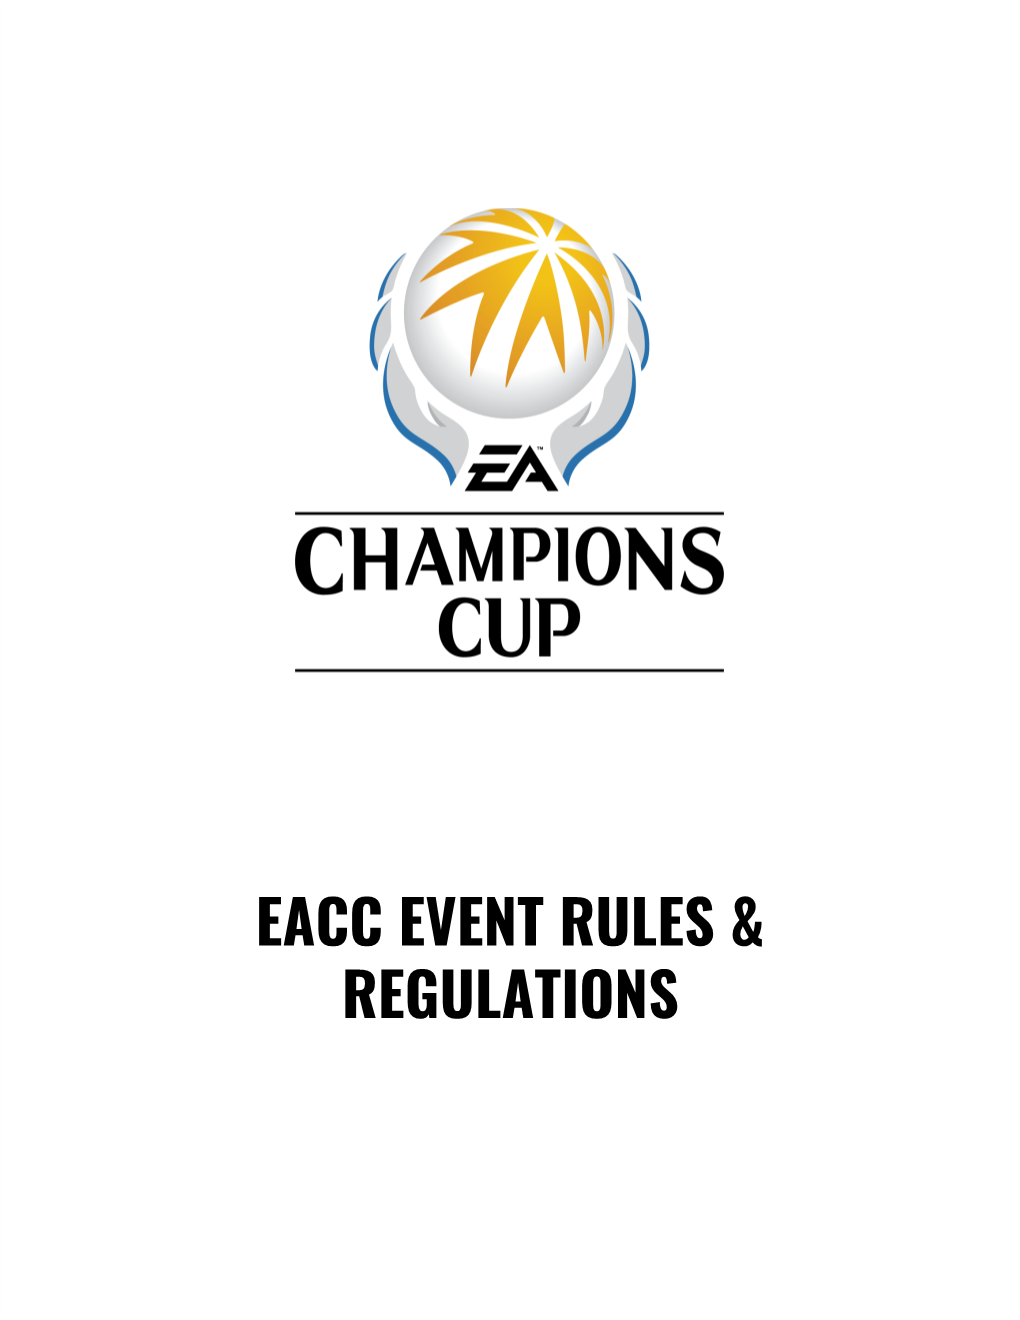 Eacc Event Rules & Regulations